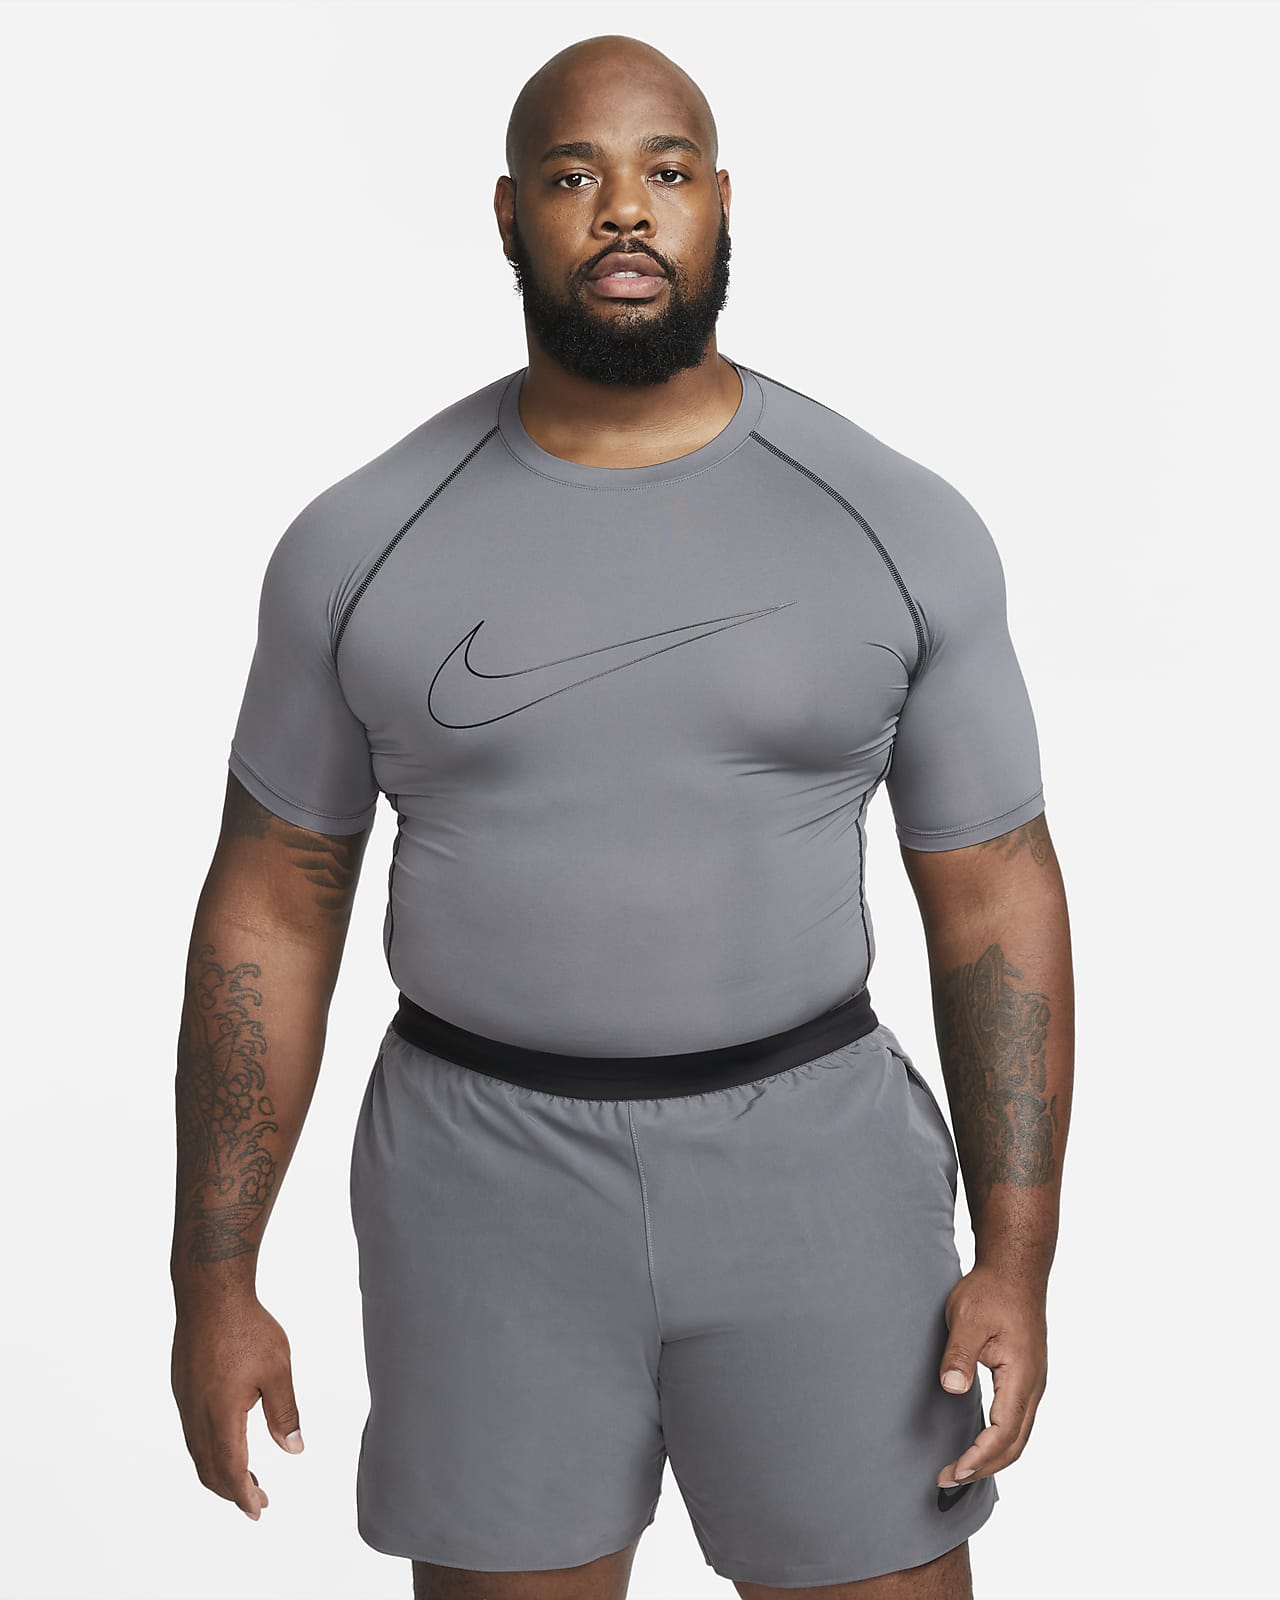 Nacional postre Lírico Nike Pro Dri-FIT Men's Tight Fit Short-Sleeve Top. Nike.com